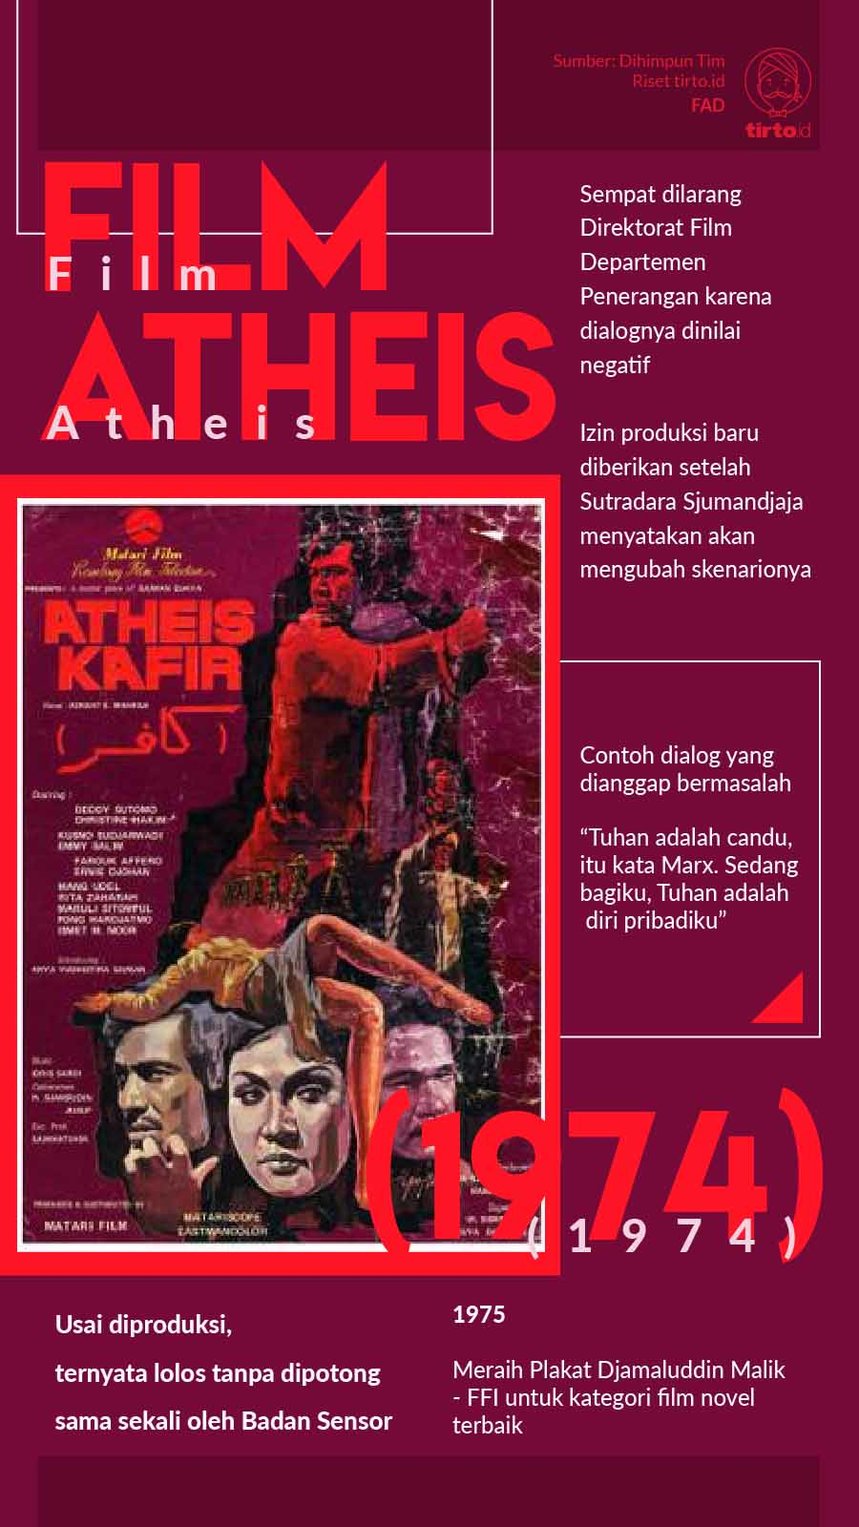 Infografik Film Atheis Kafir